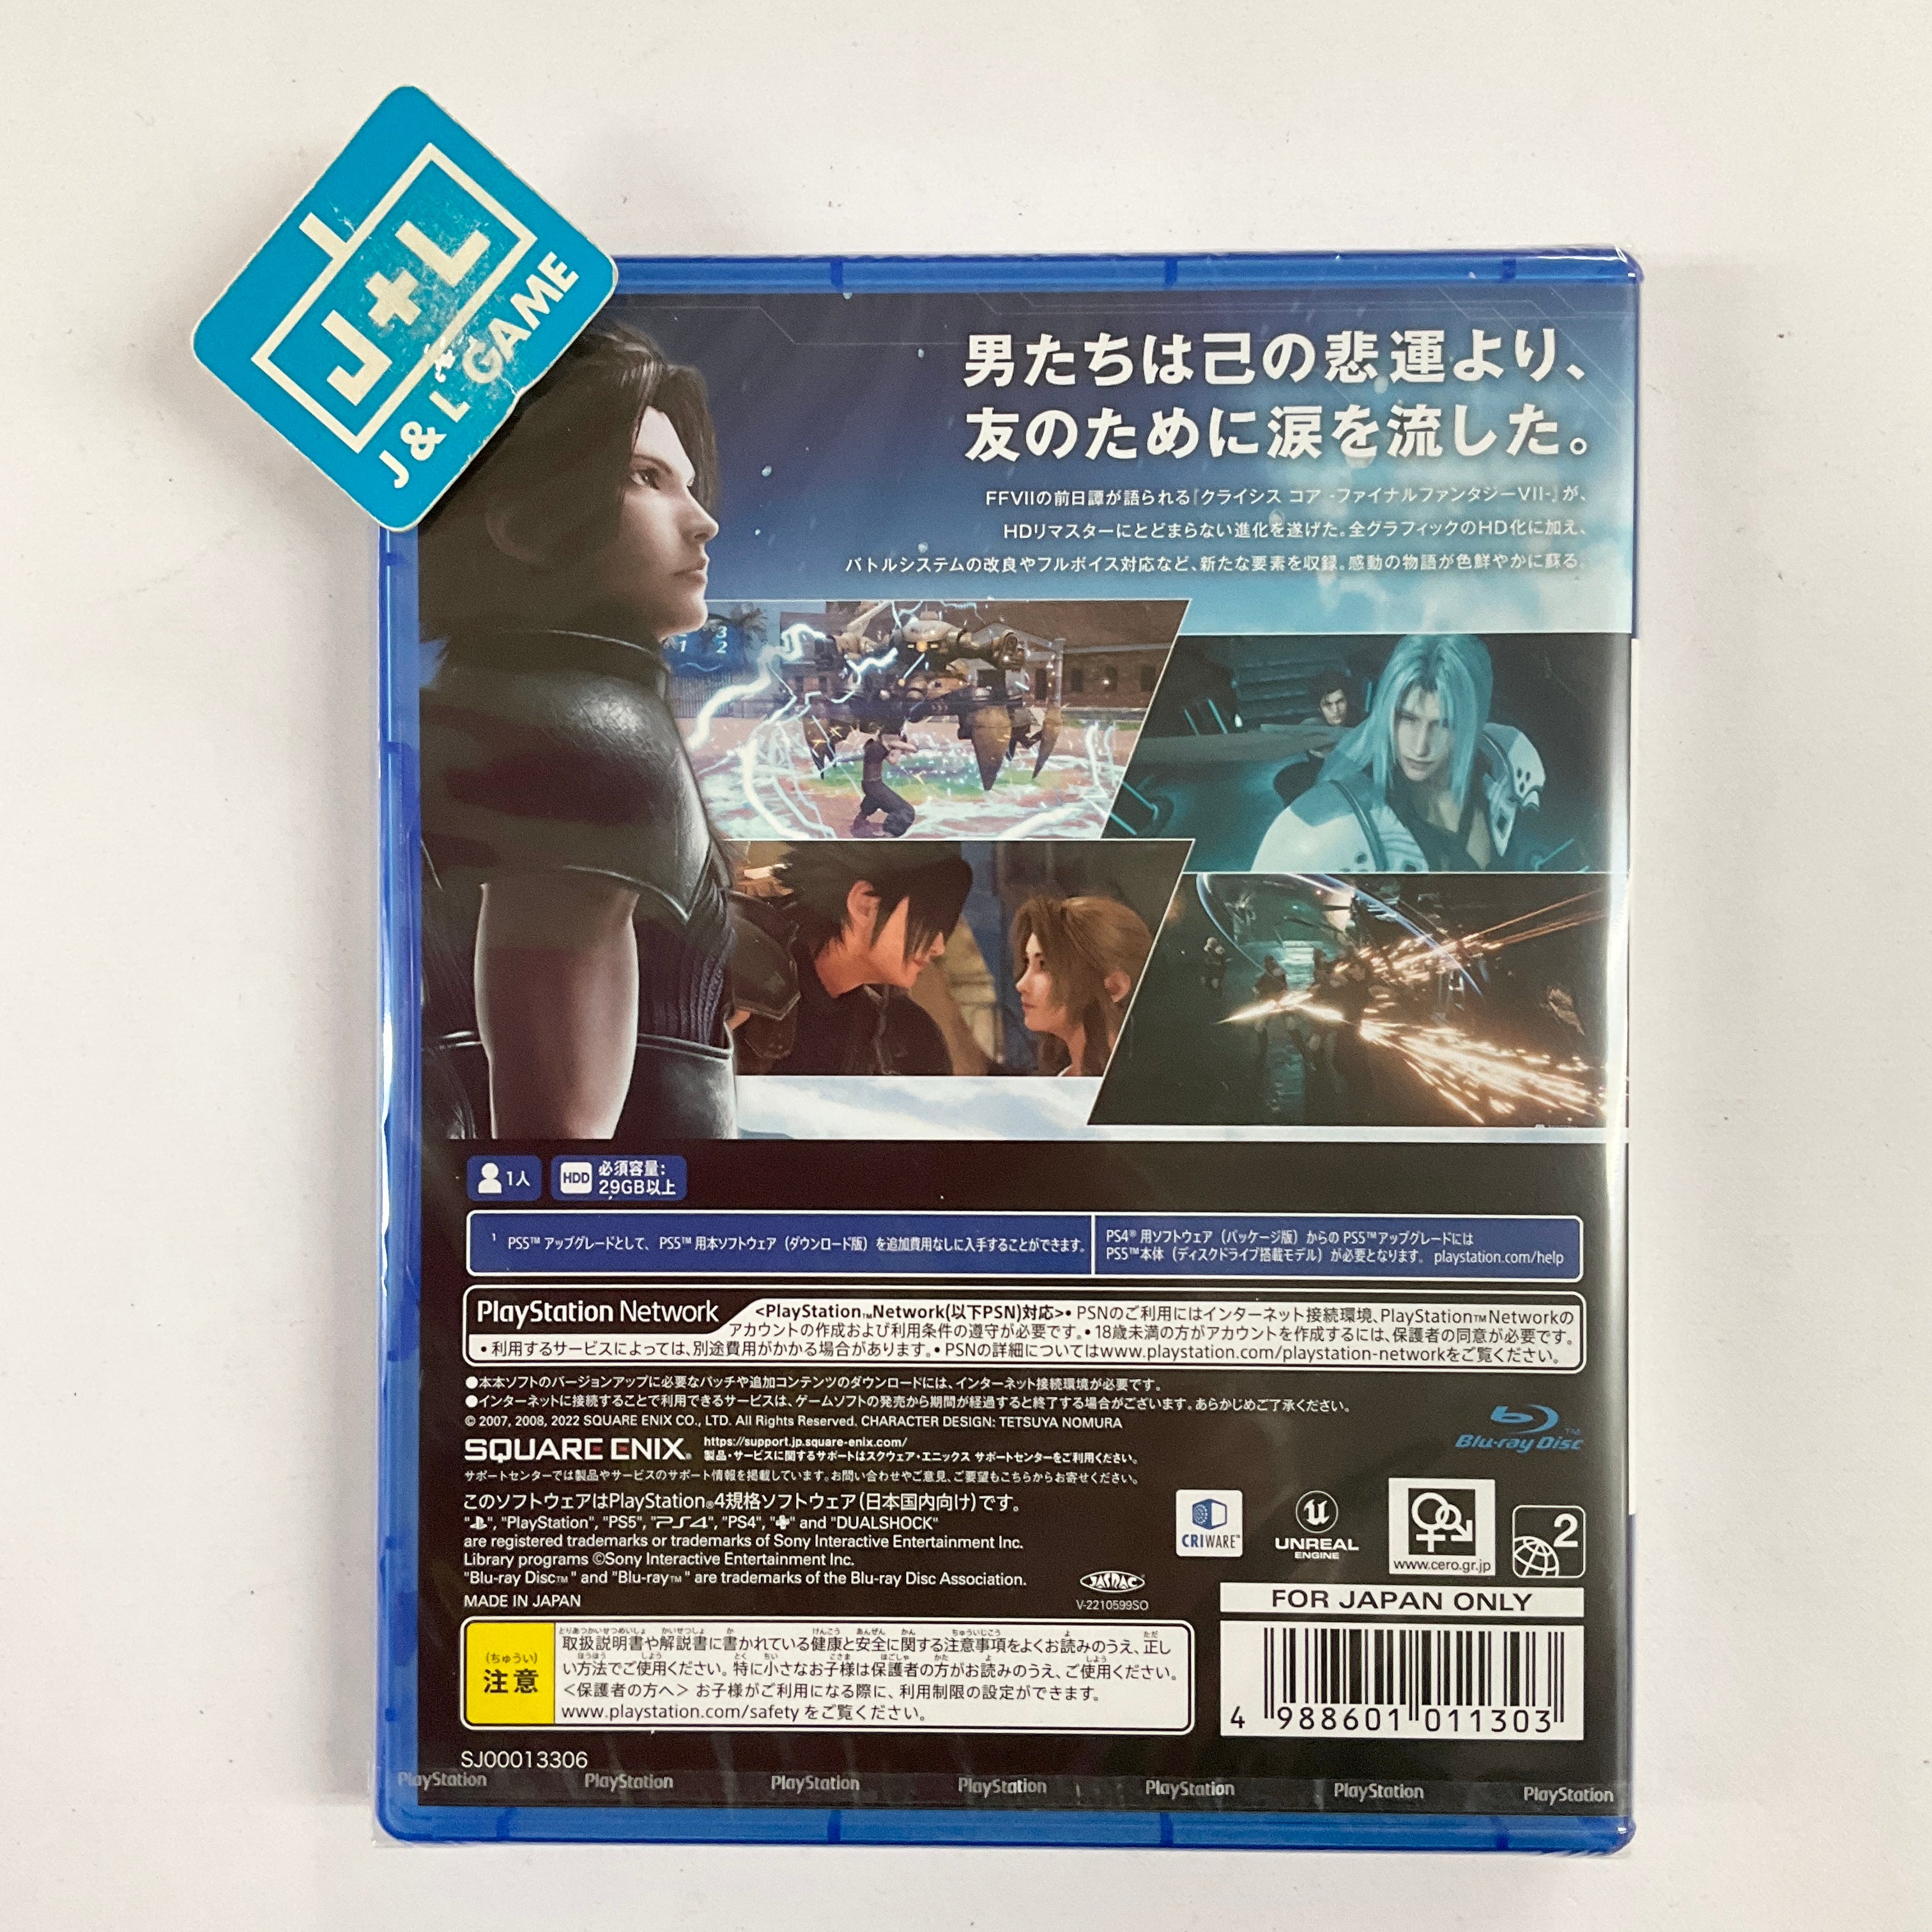 Crisis Core: Final Fantasy VII Reunion - (PS4) PlayStation 4 (Japanese Import) Video Games Square Enix   